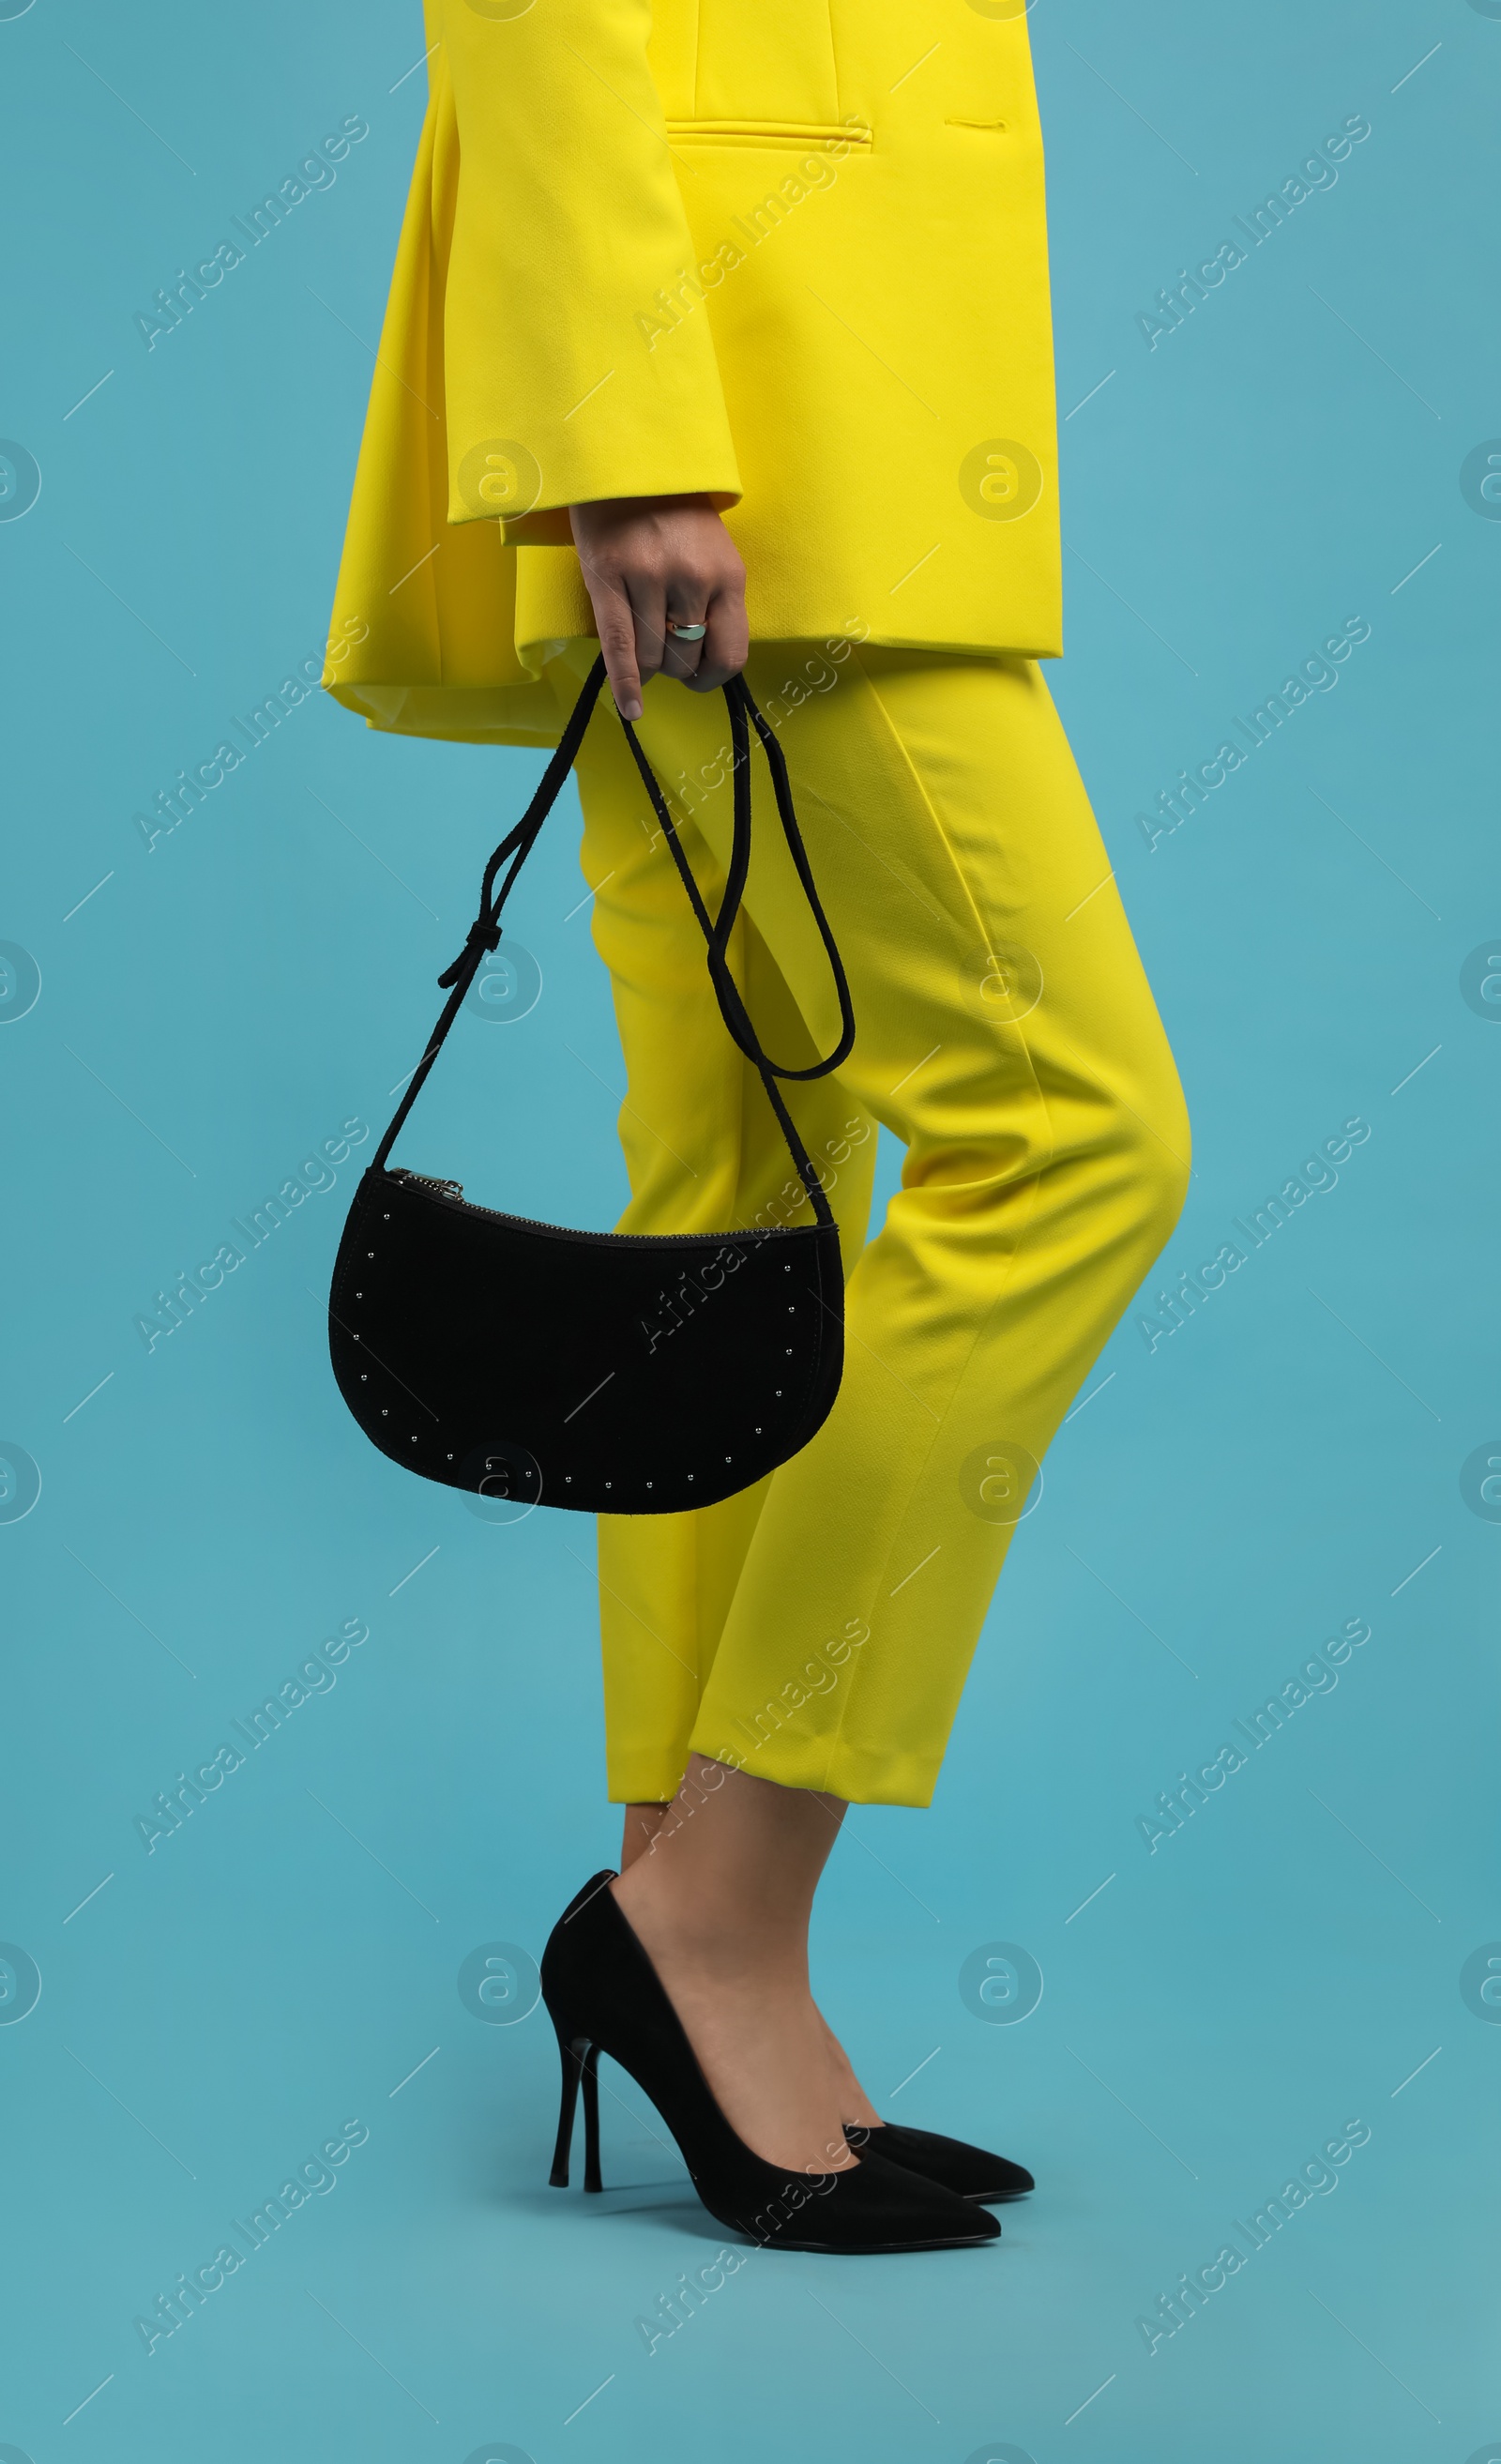 Photo of Fashionable woman with stylish bag on light blue background, closeup